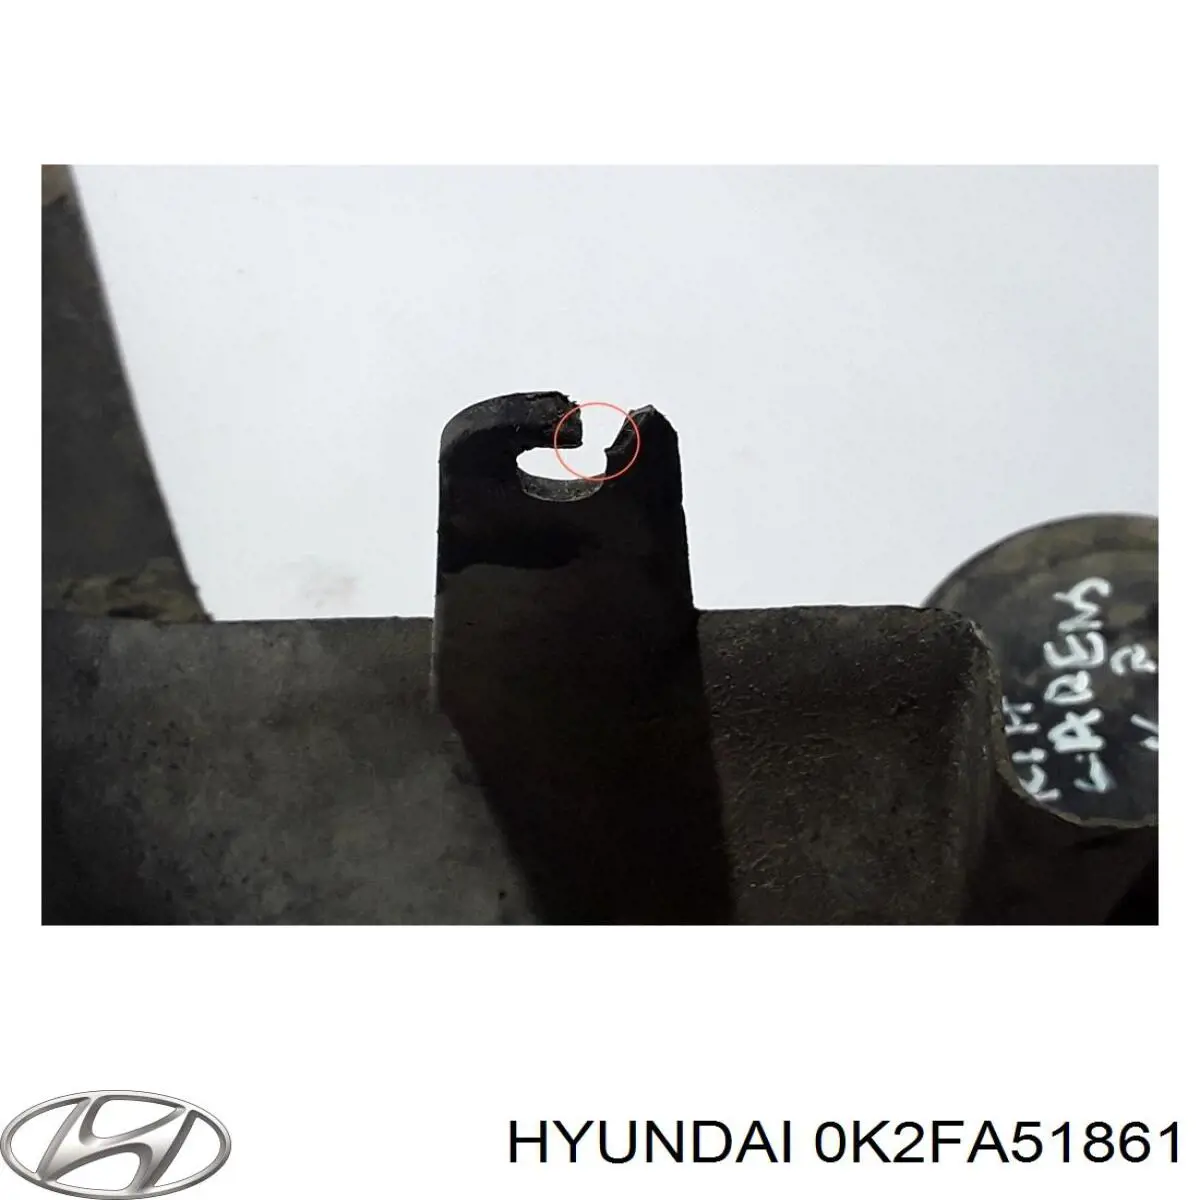 0K2FA51861 Hyundai/Kia faldilla guardabarro delantera izquierda